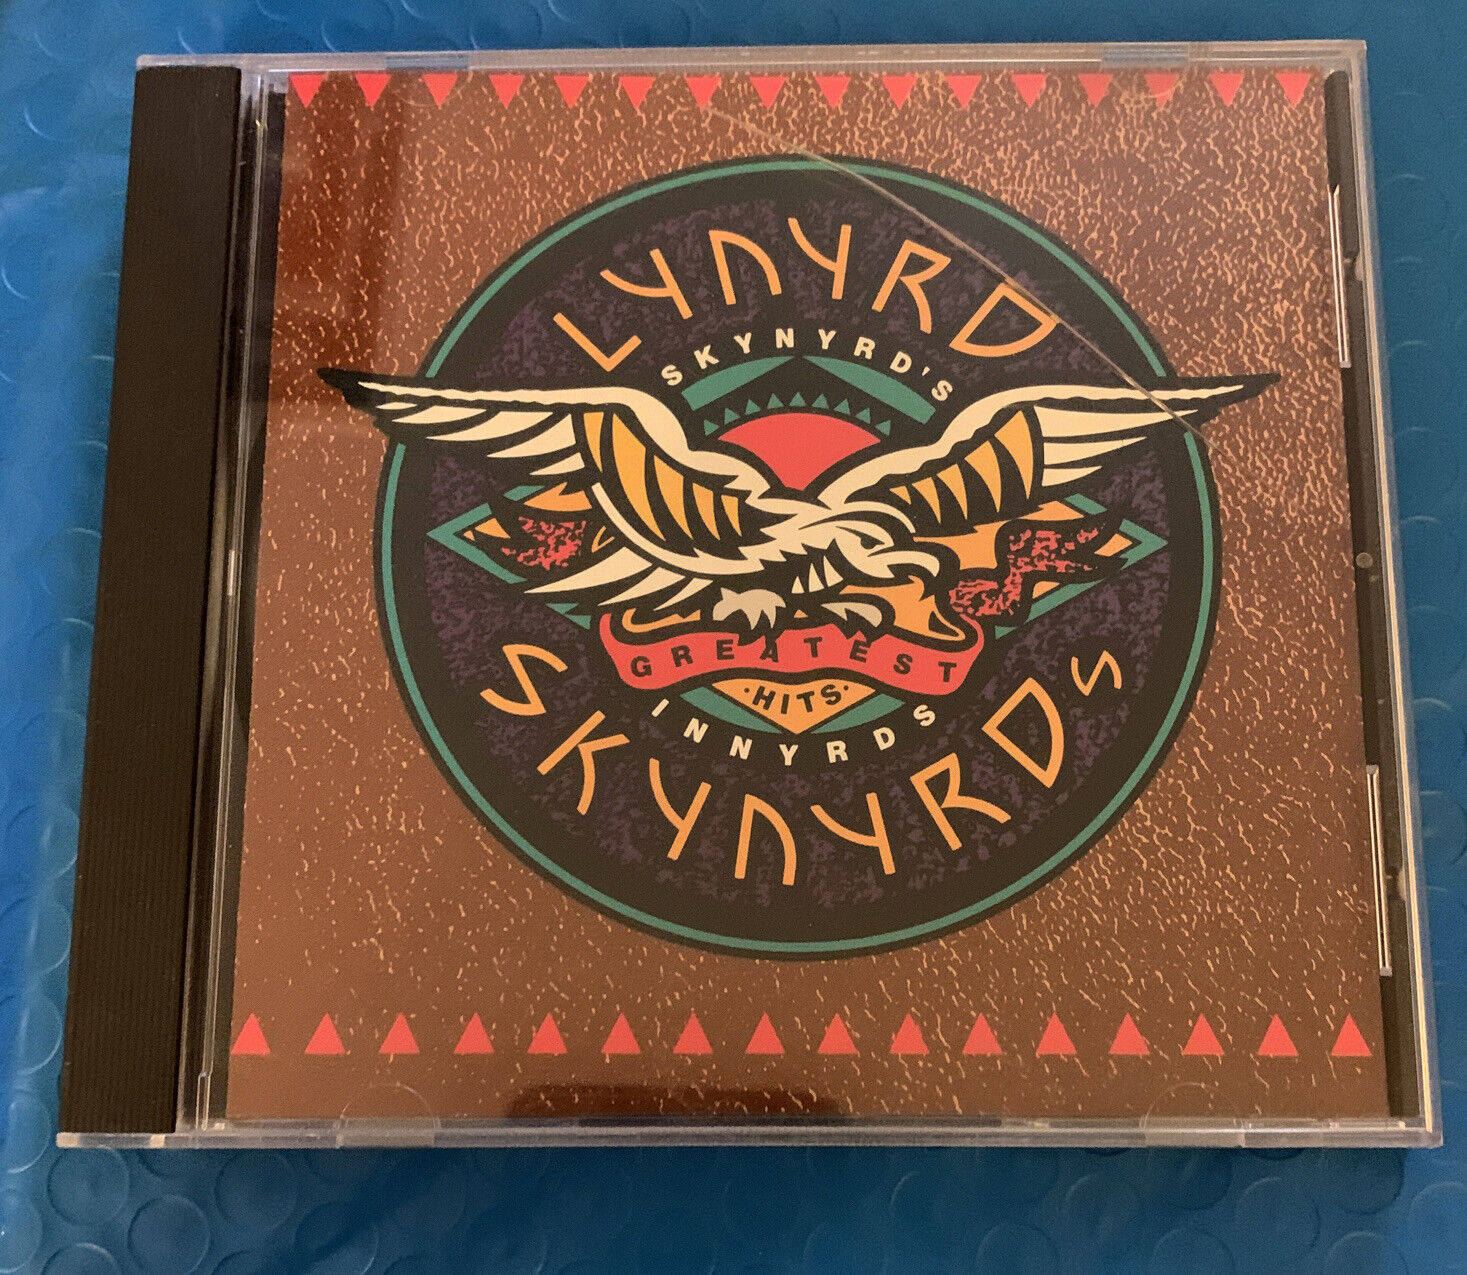 Lynyrd Skynyrd - Skynyrds Innyrds Their Greatest Hits (CD, 1989) Rare, 